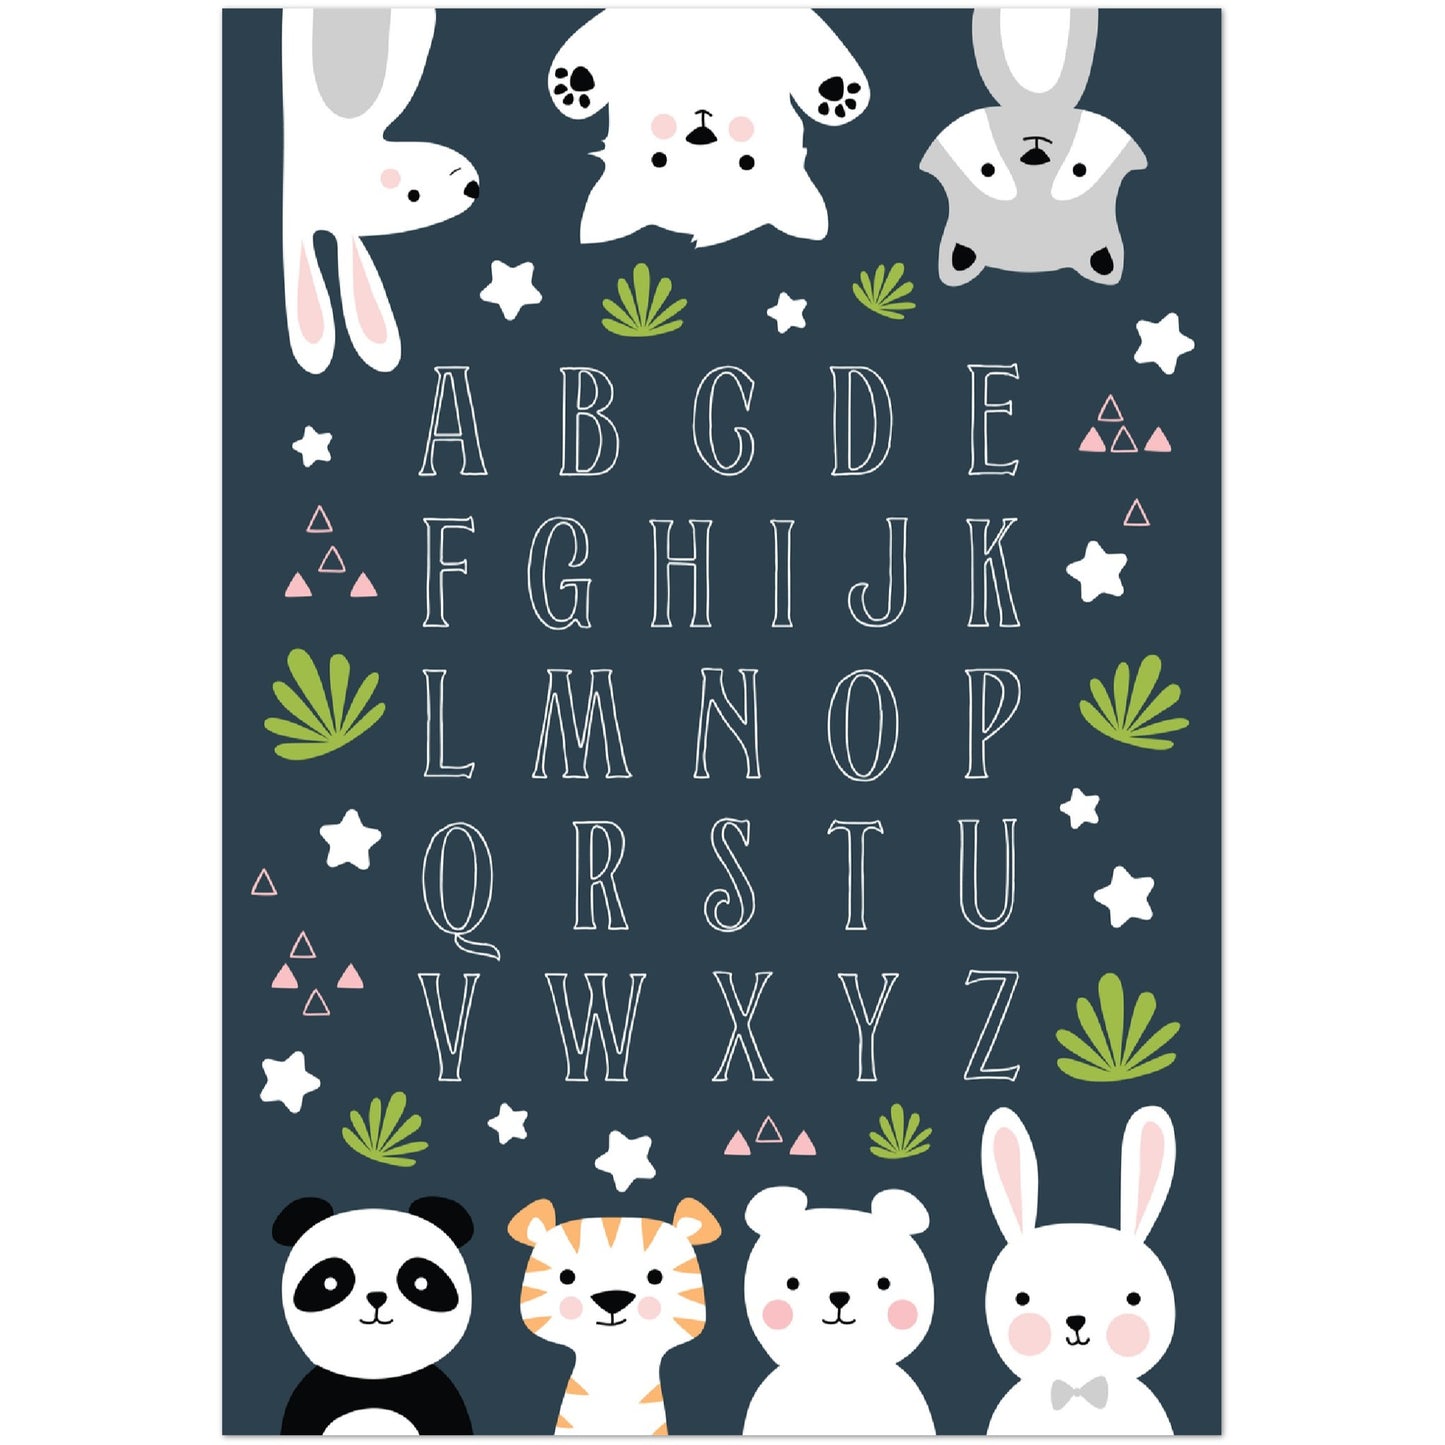 ABC Alphabet With Jungle Animals Print